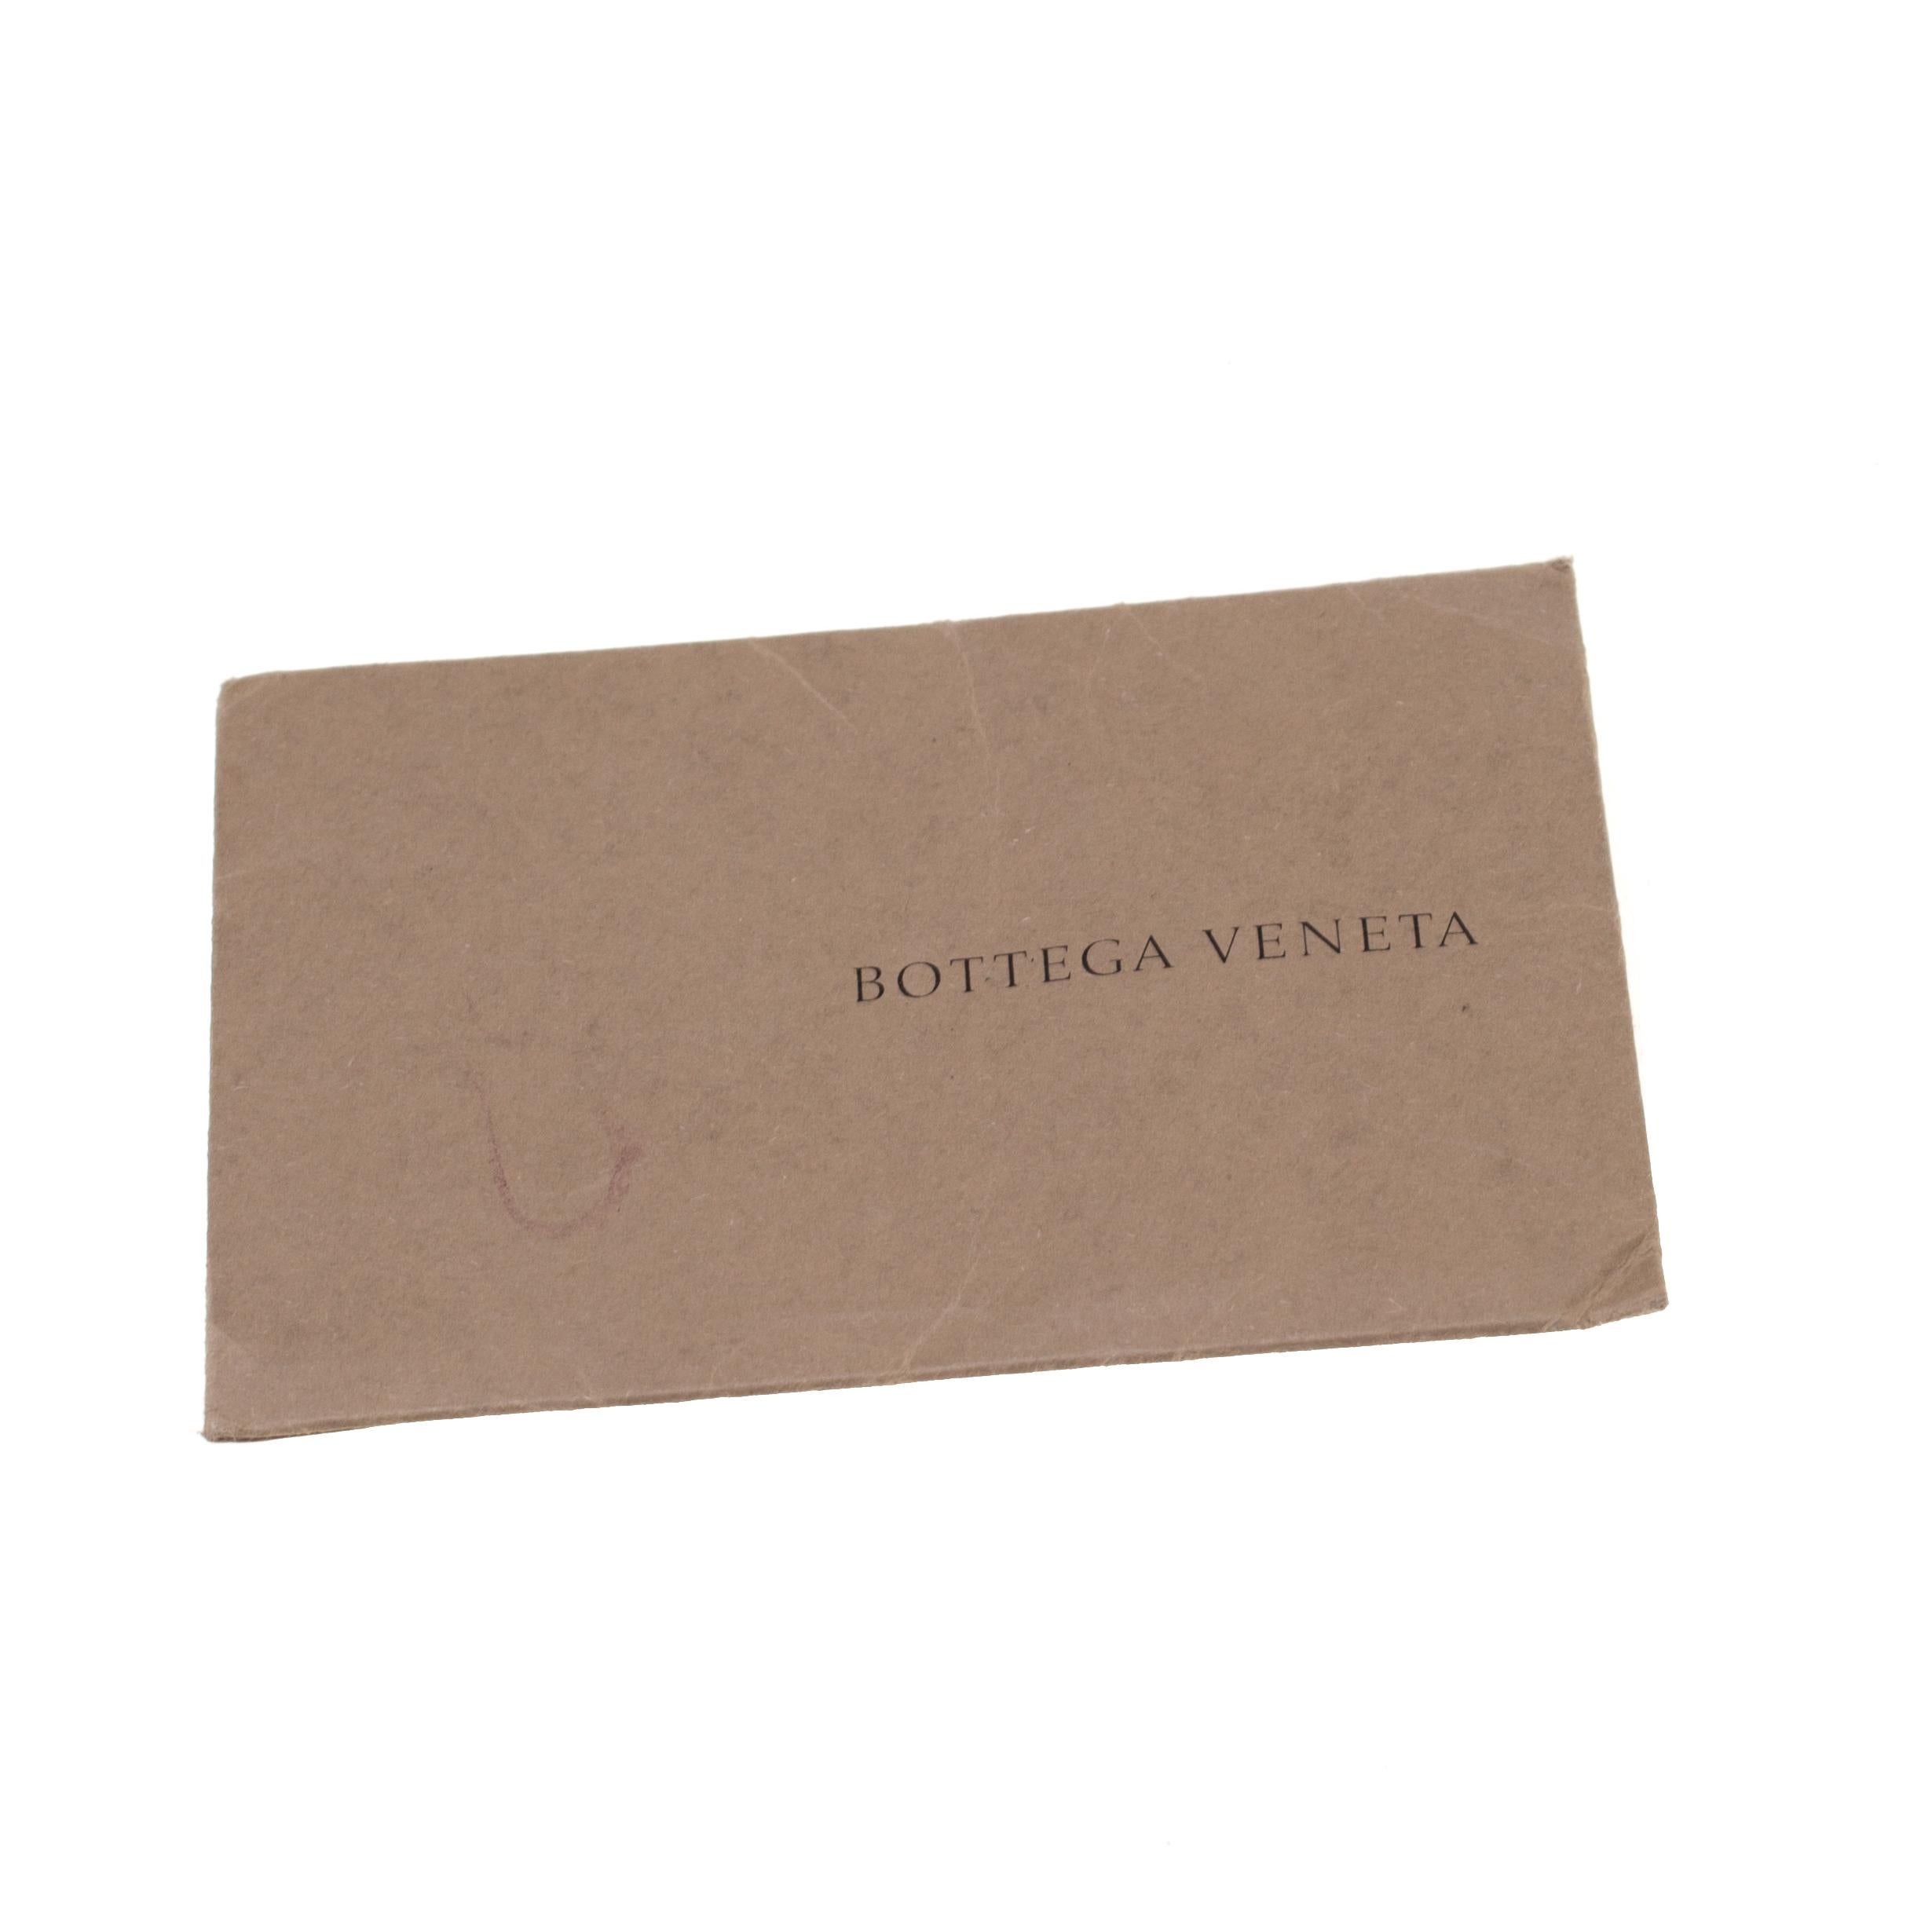 Bottega Veneta Ombre Intrecciato Leather Large Veneta Hobo 3